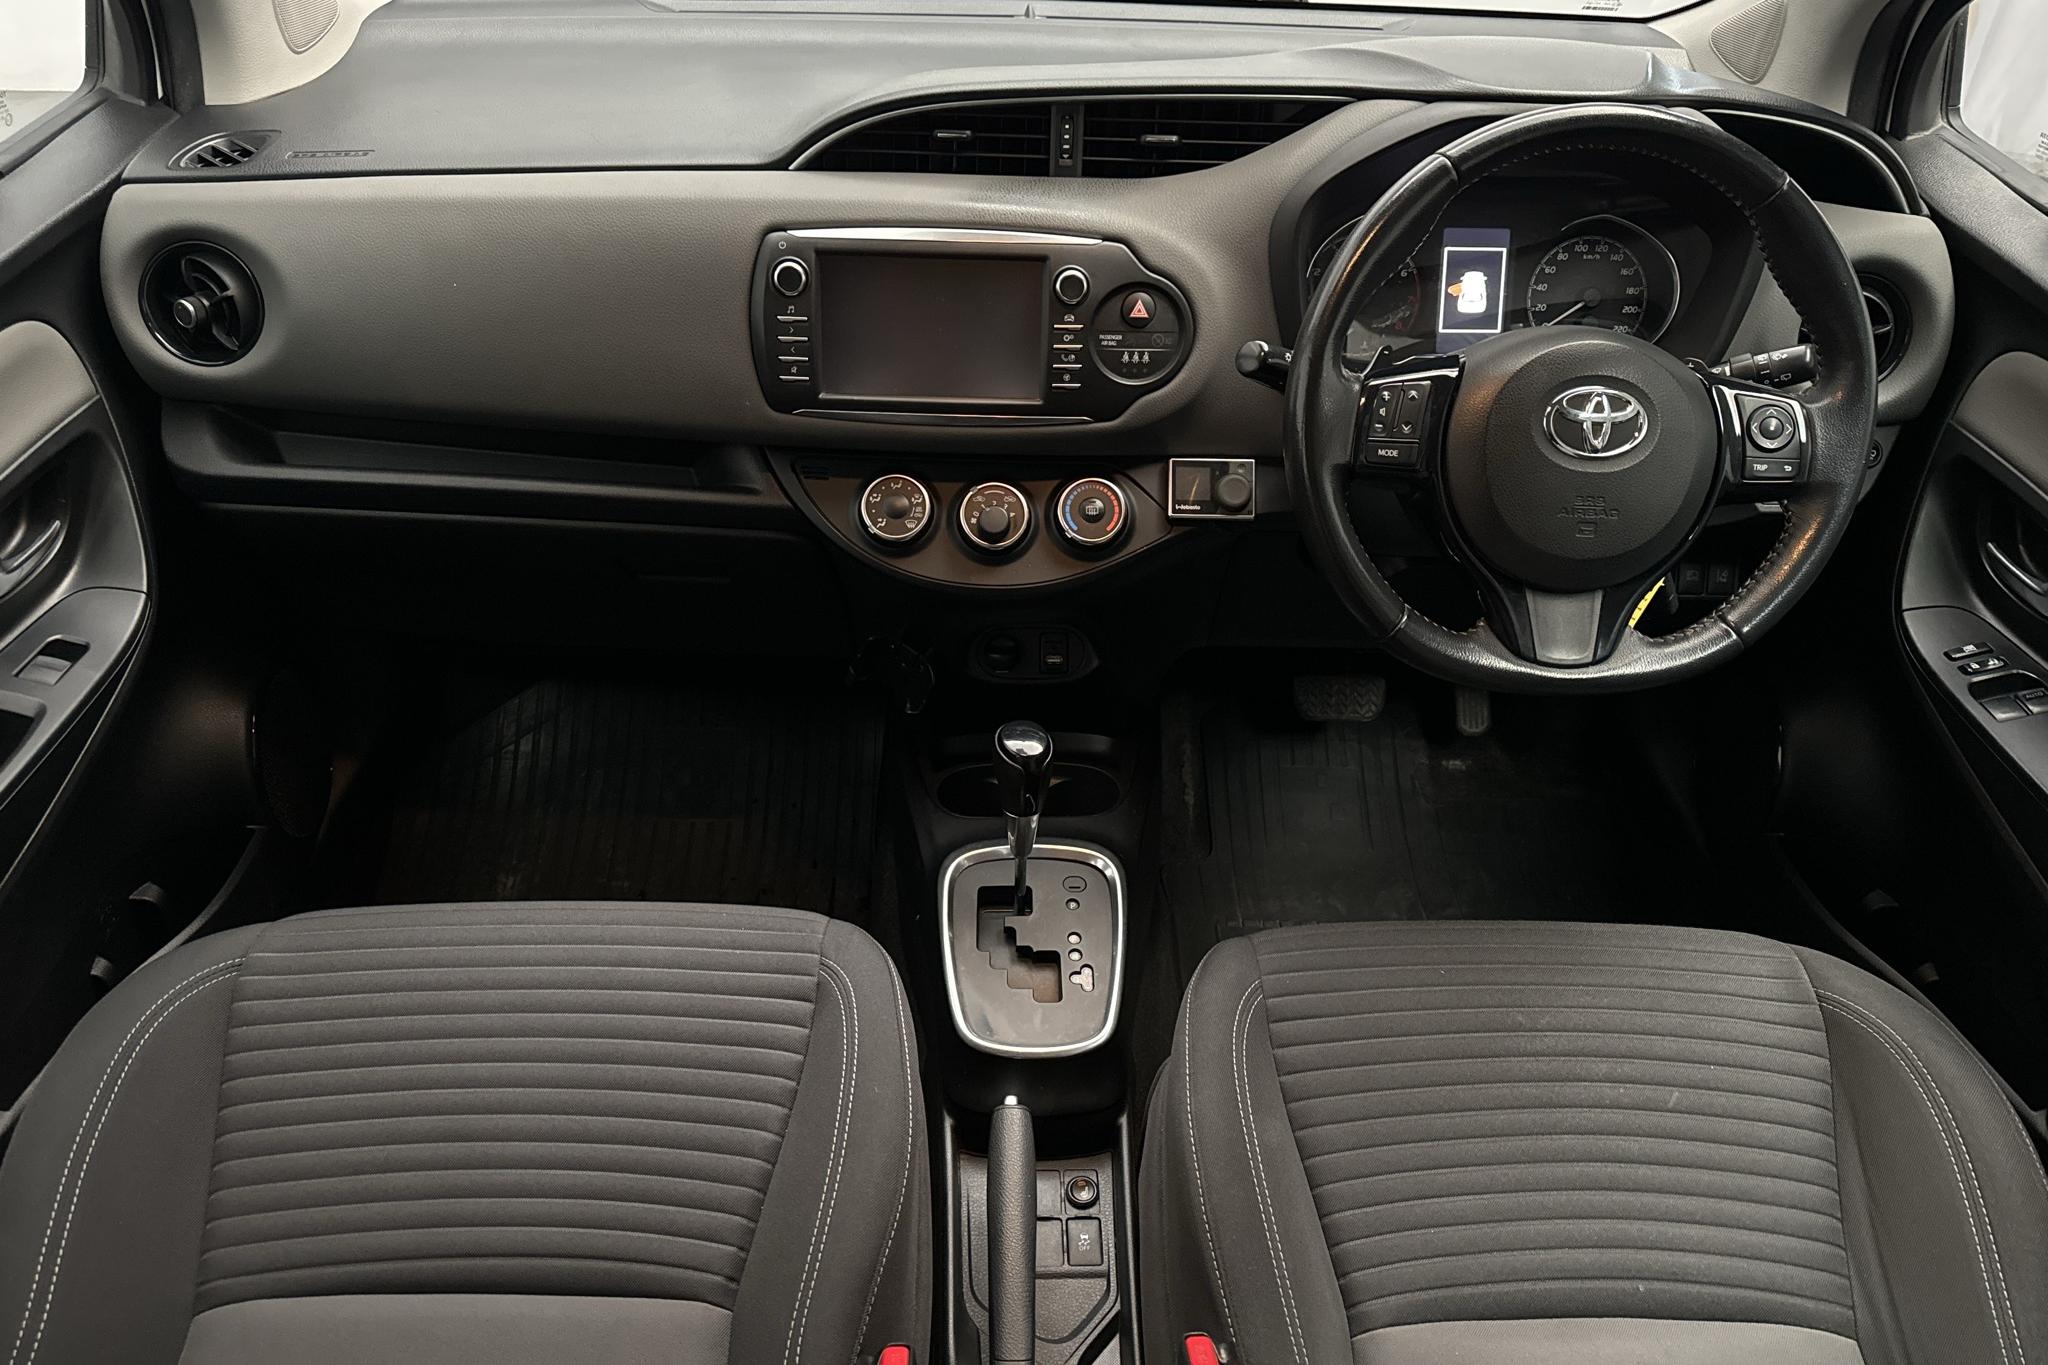 Toyota Yaris 1.5 5dr (111hk) - 82 050 km - Automatic - white - 2018